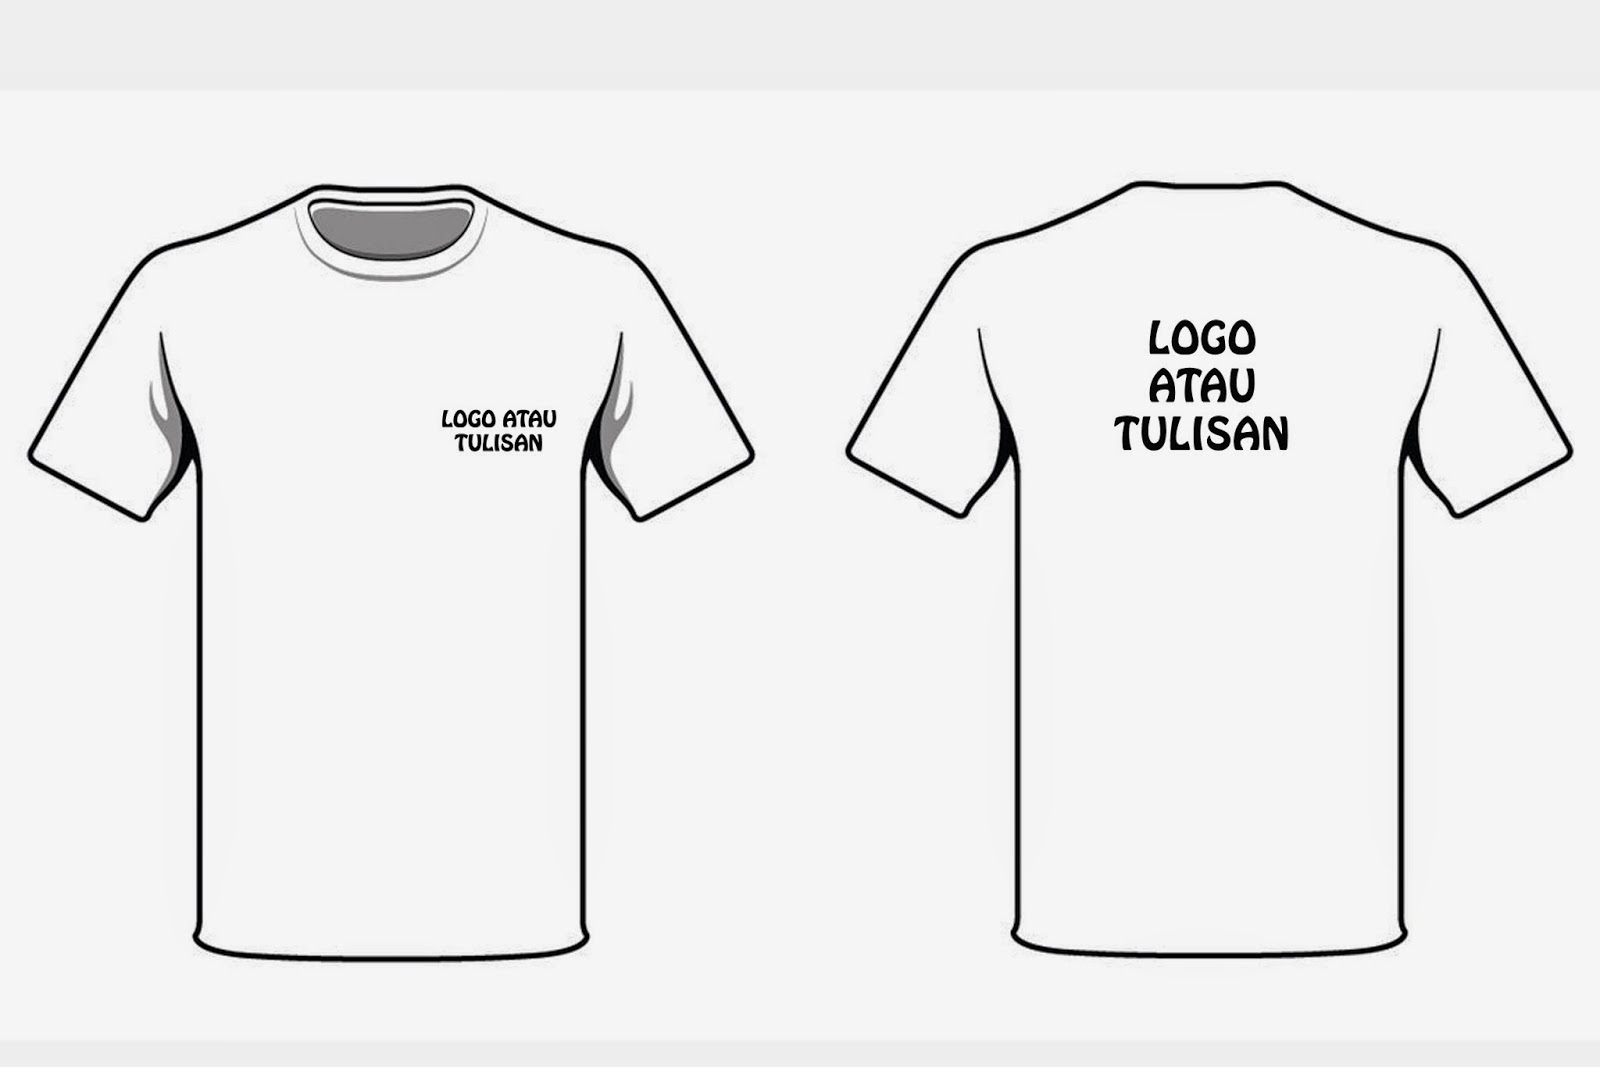 Theme T Shirt Design From Coreldraw Joy Studio Design 